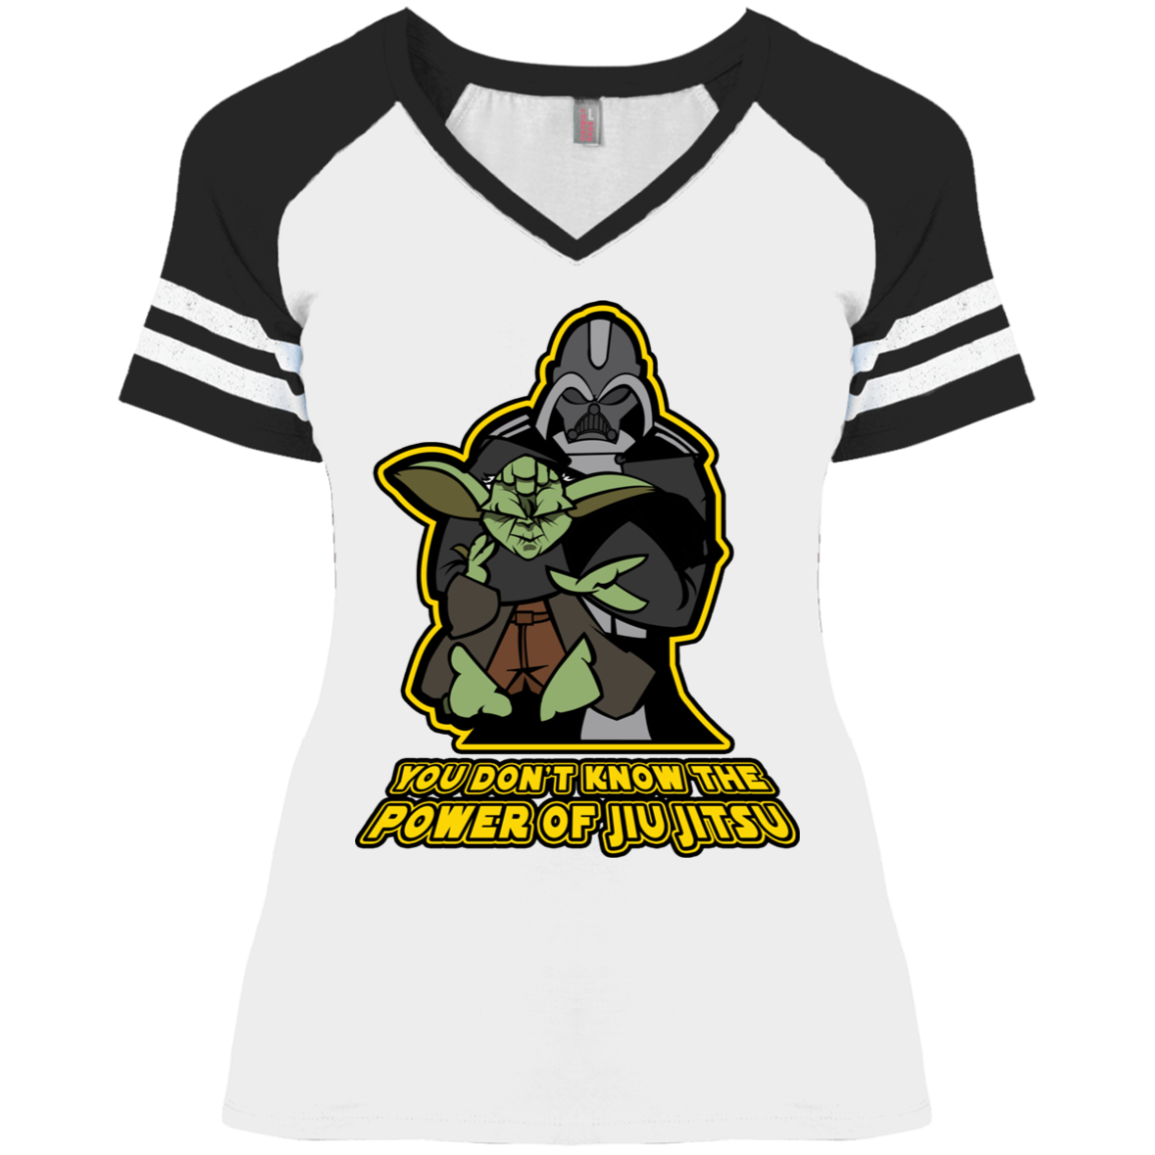 Artichoke Fight Gear Custom Design #20. You Don't Know the Power of Jiu Jitsu. Ladies' Game V-Neck T-Shirt